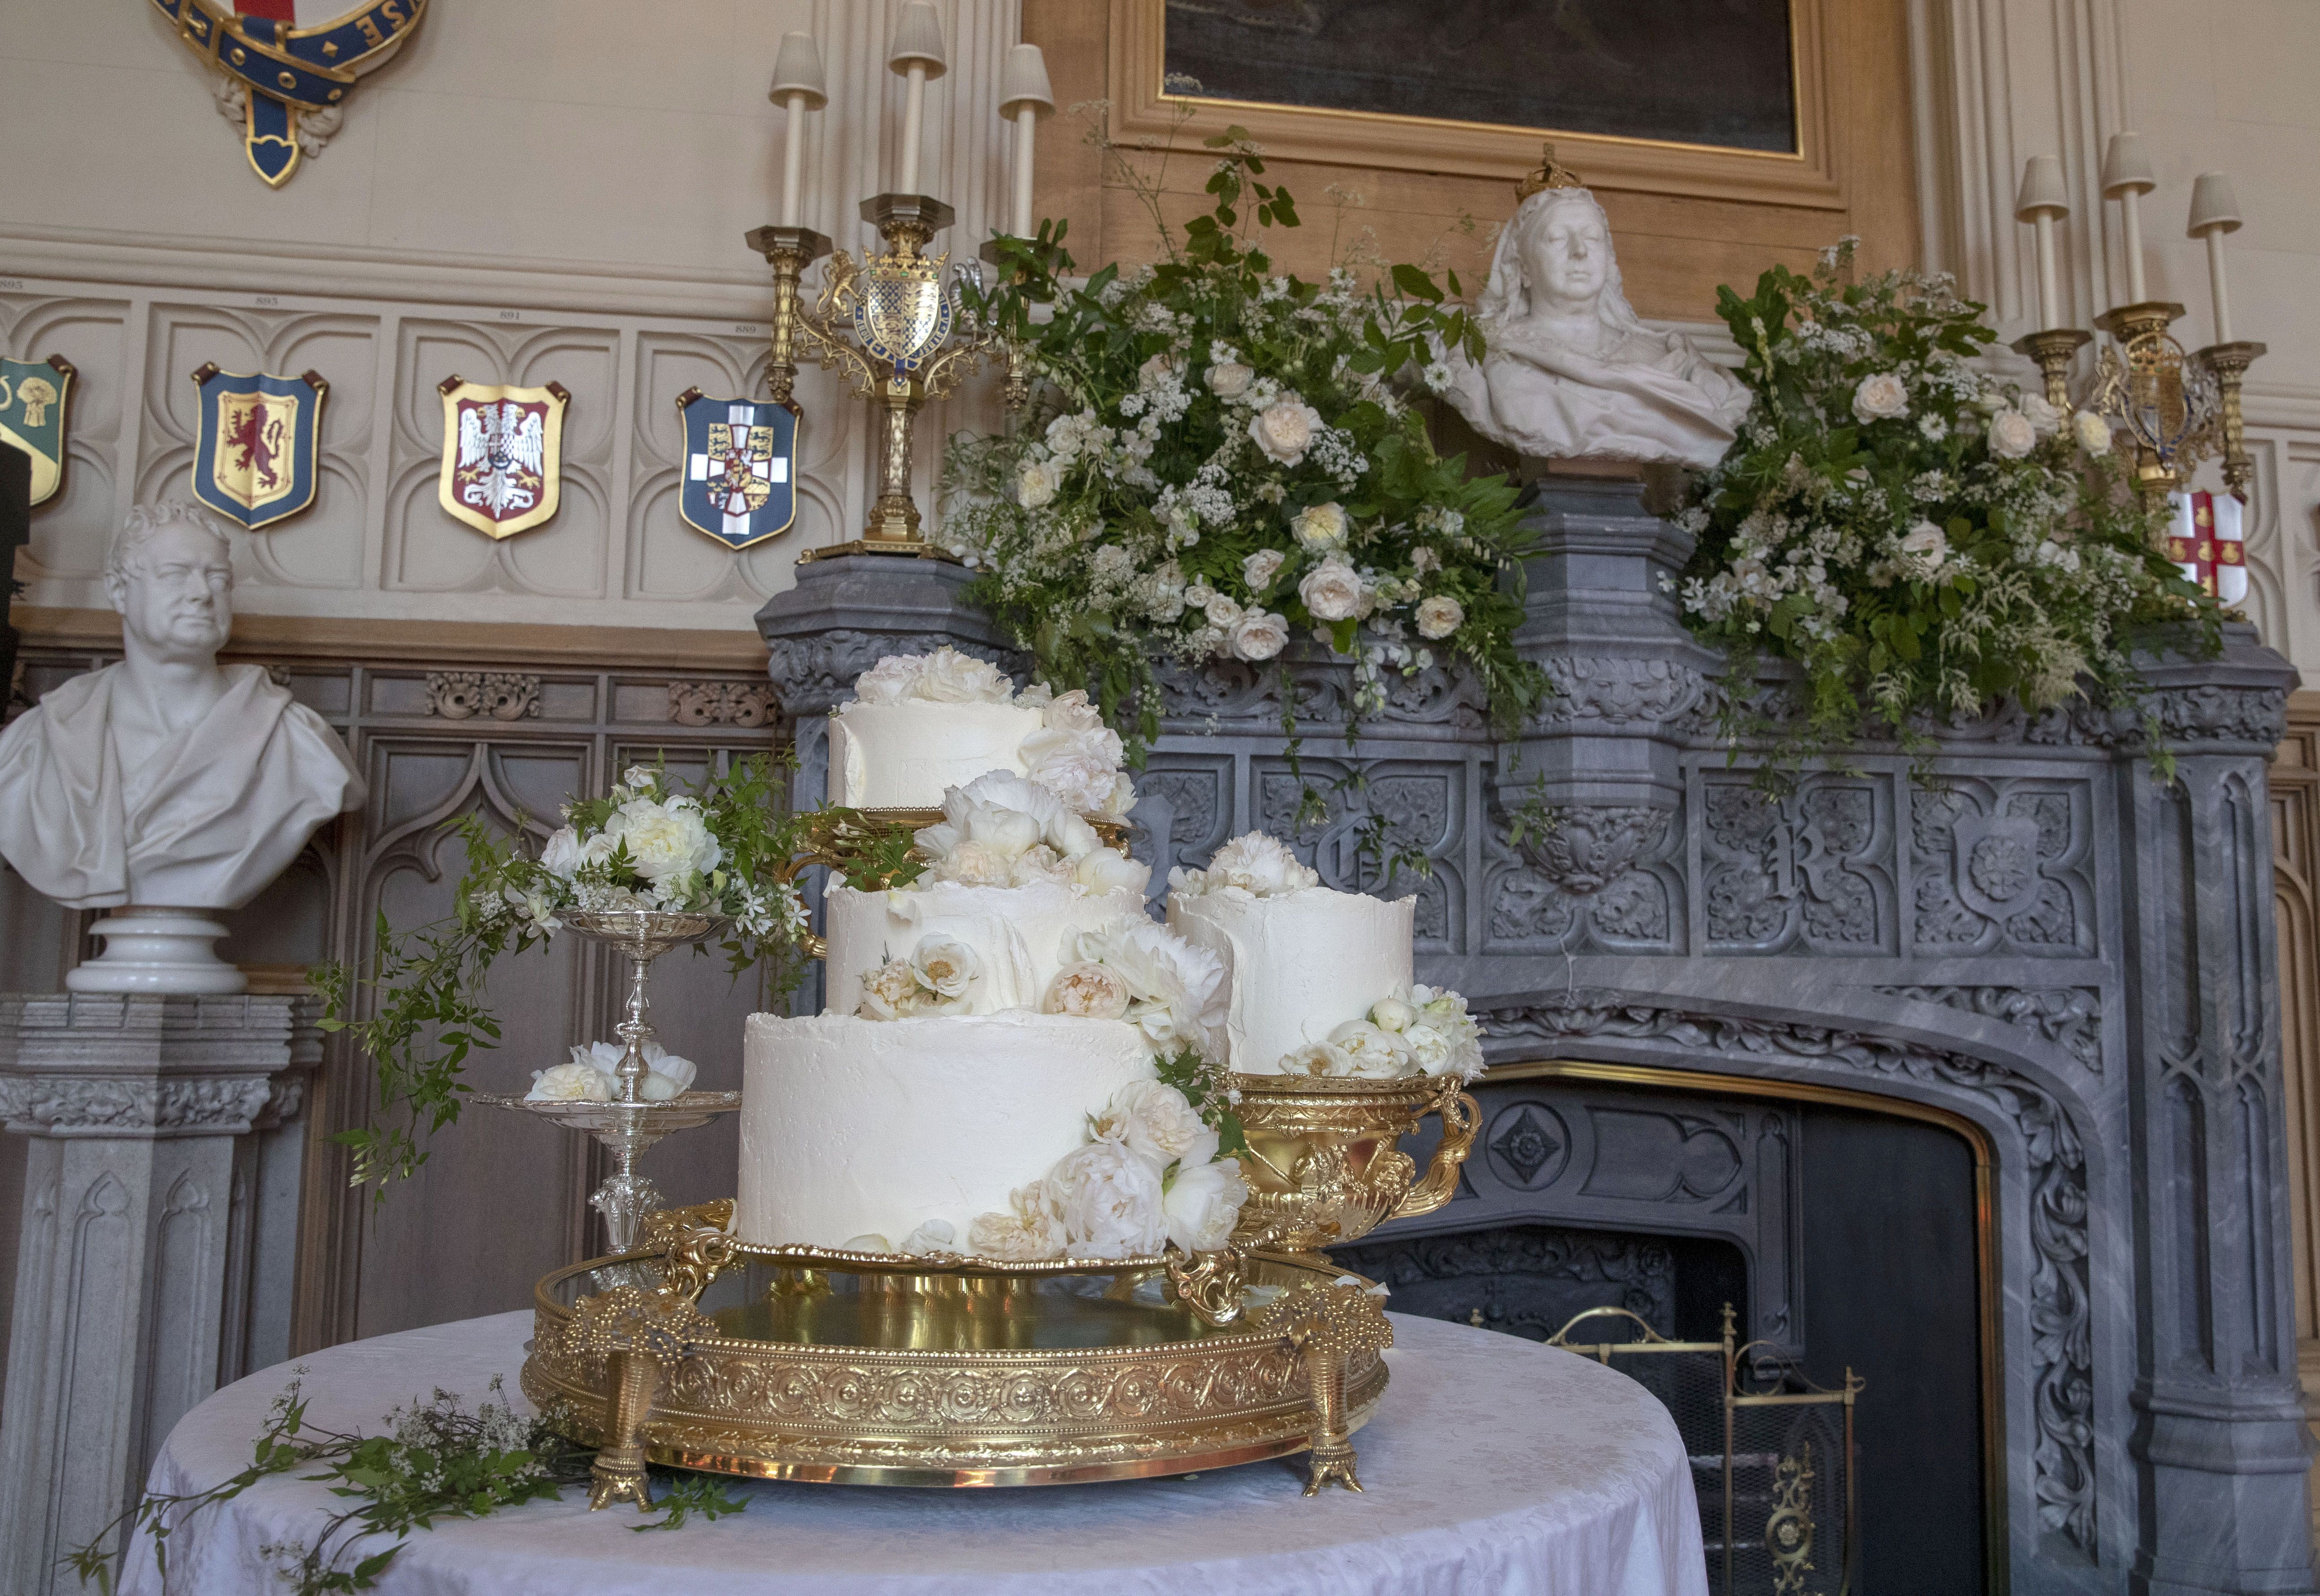 Royal wedding cakes